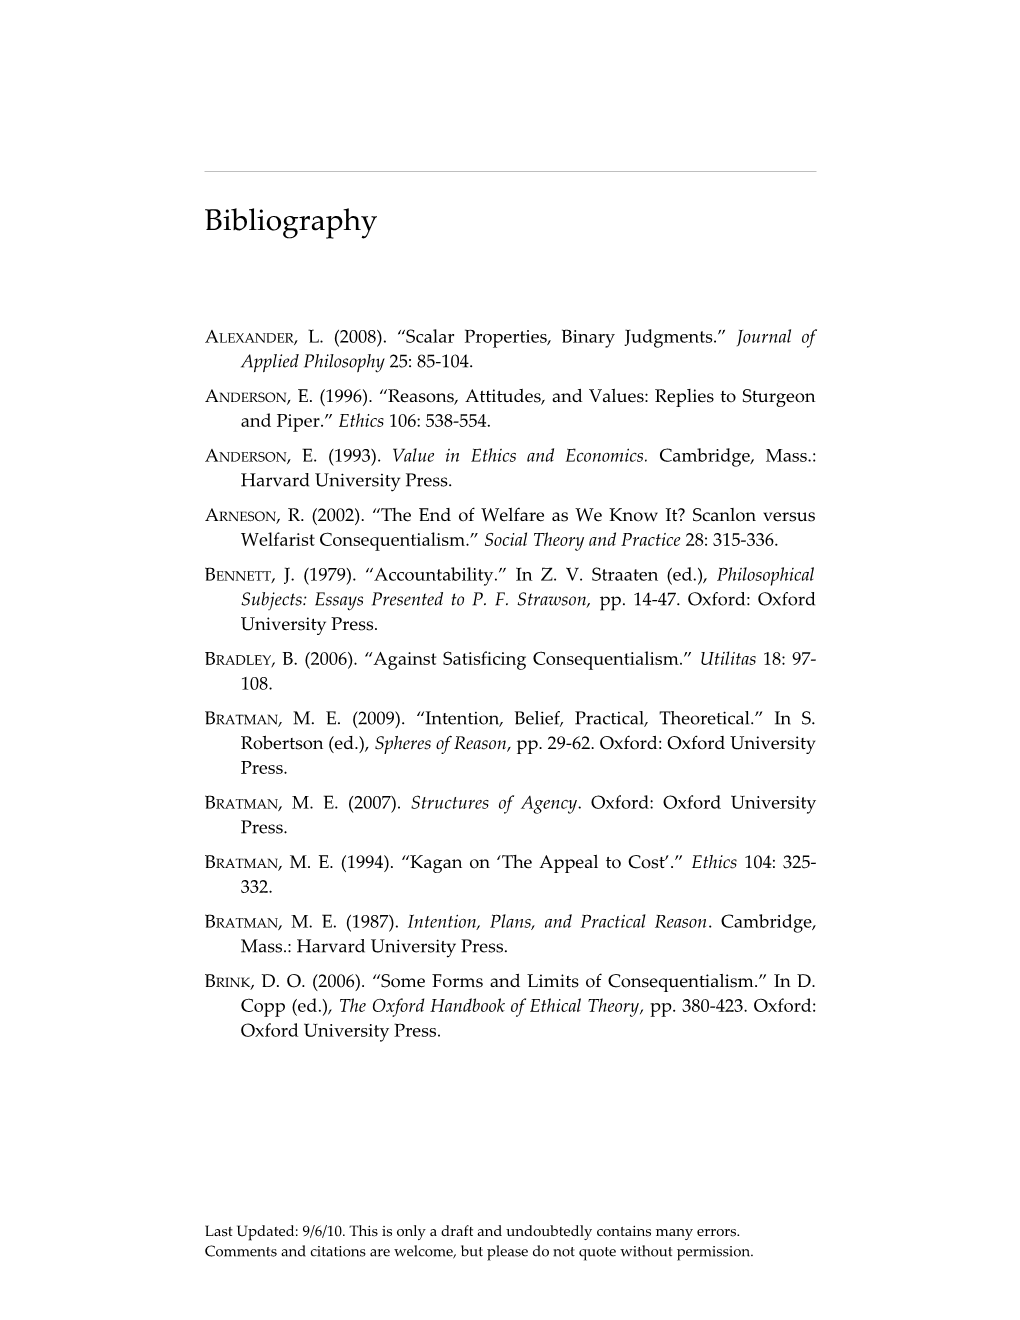 Alexander, L. (2008). Scalar Properties, Binary Judgments. Journal of Applied Philosophy